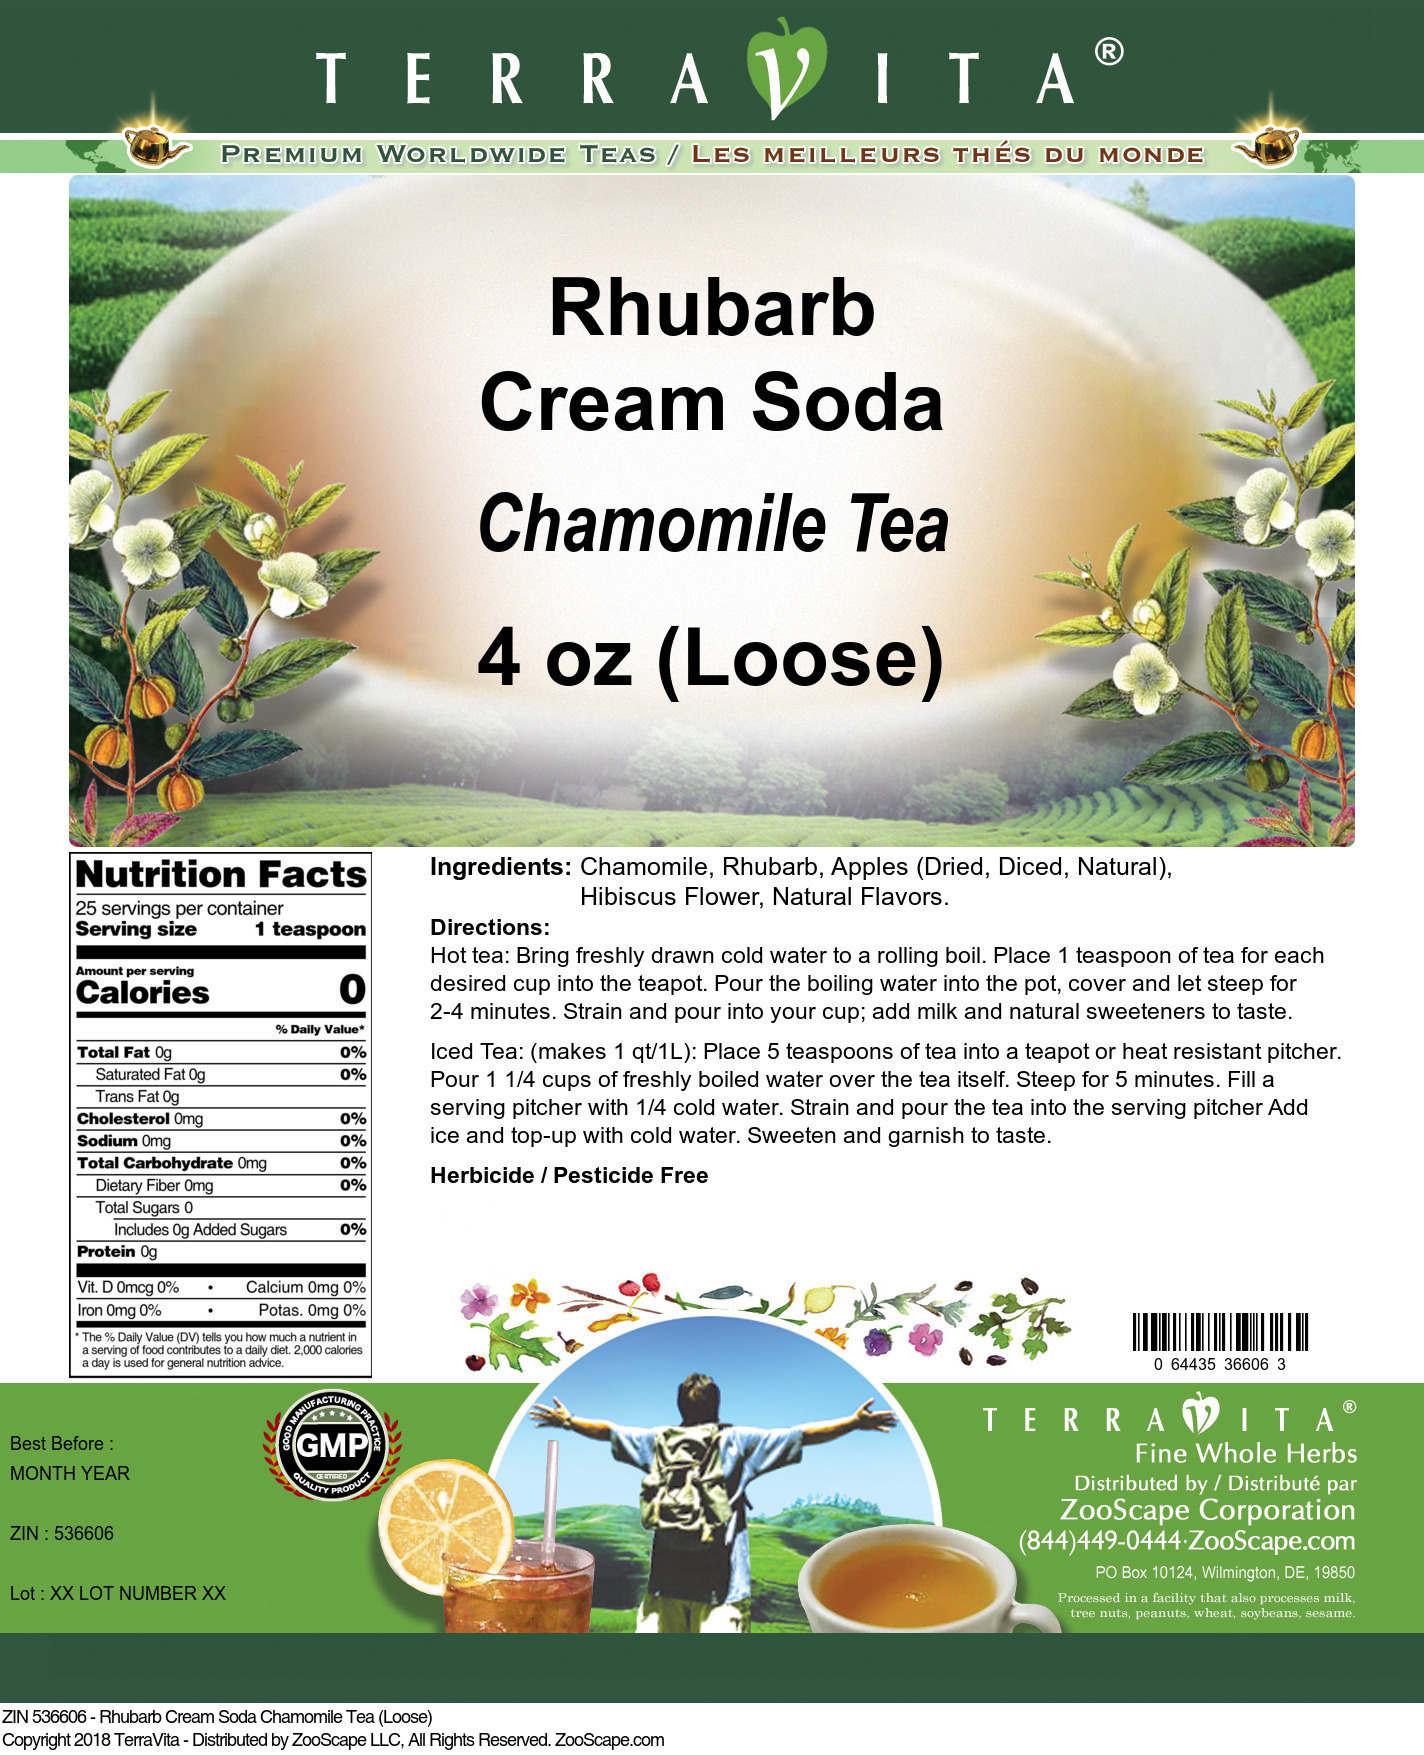 Rhubarb Cream Soda Chamomile Tea (Loose) - Label